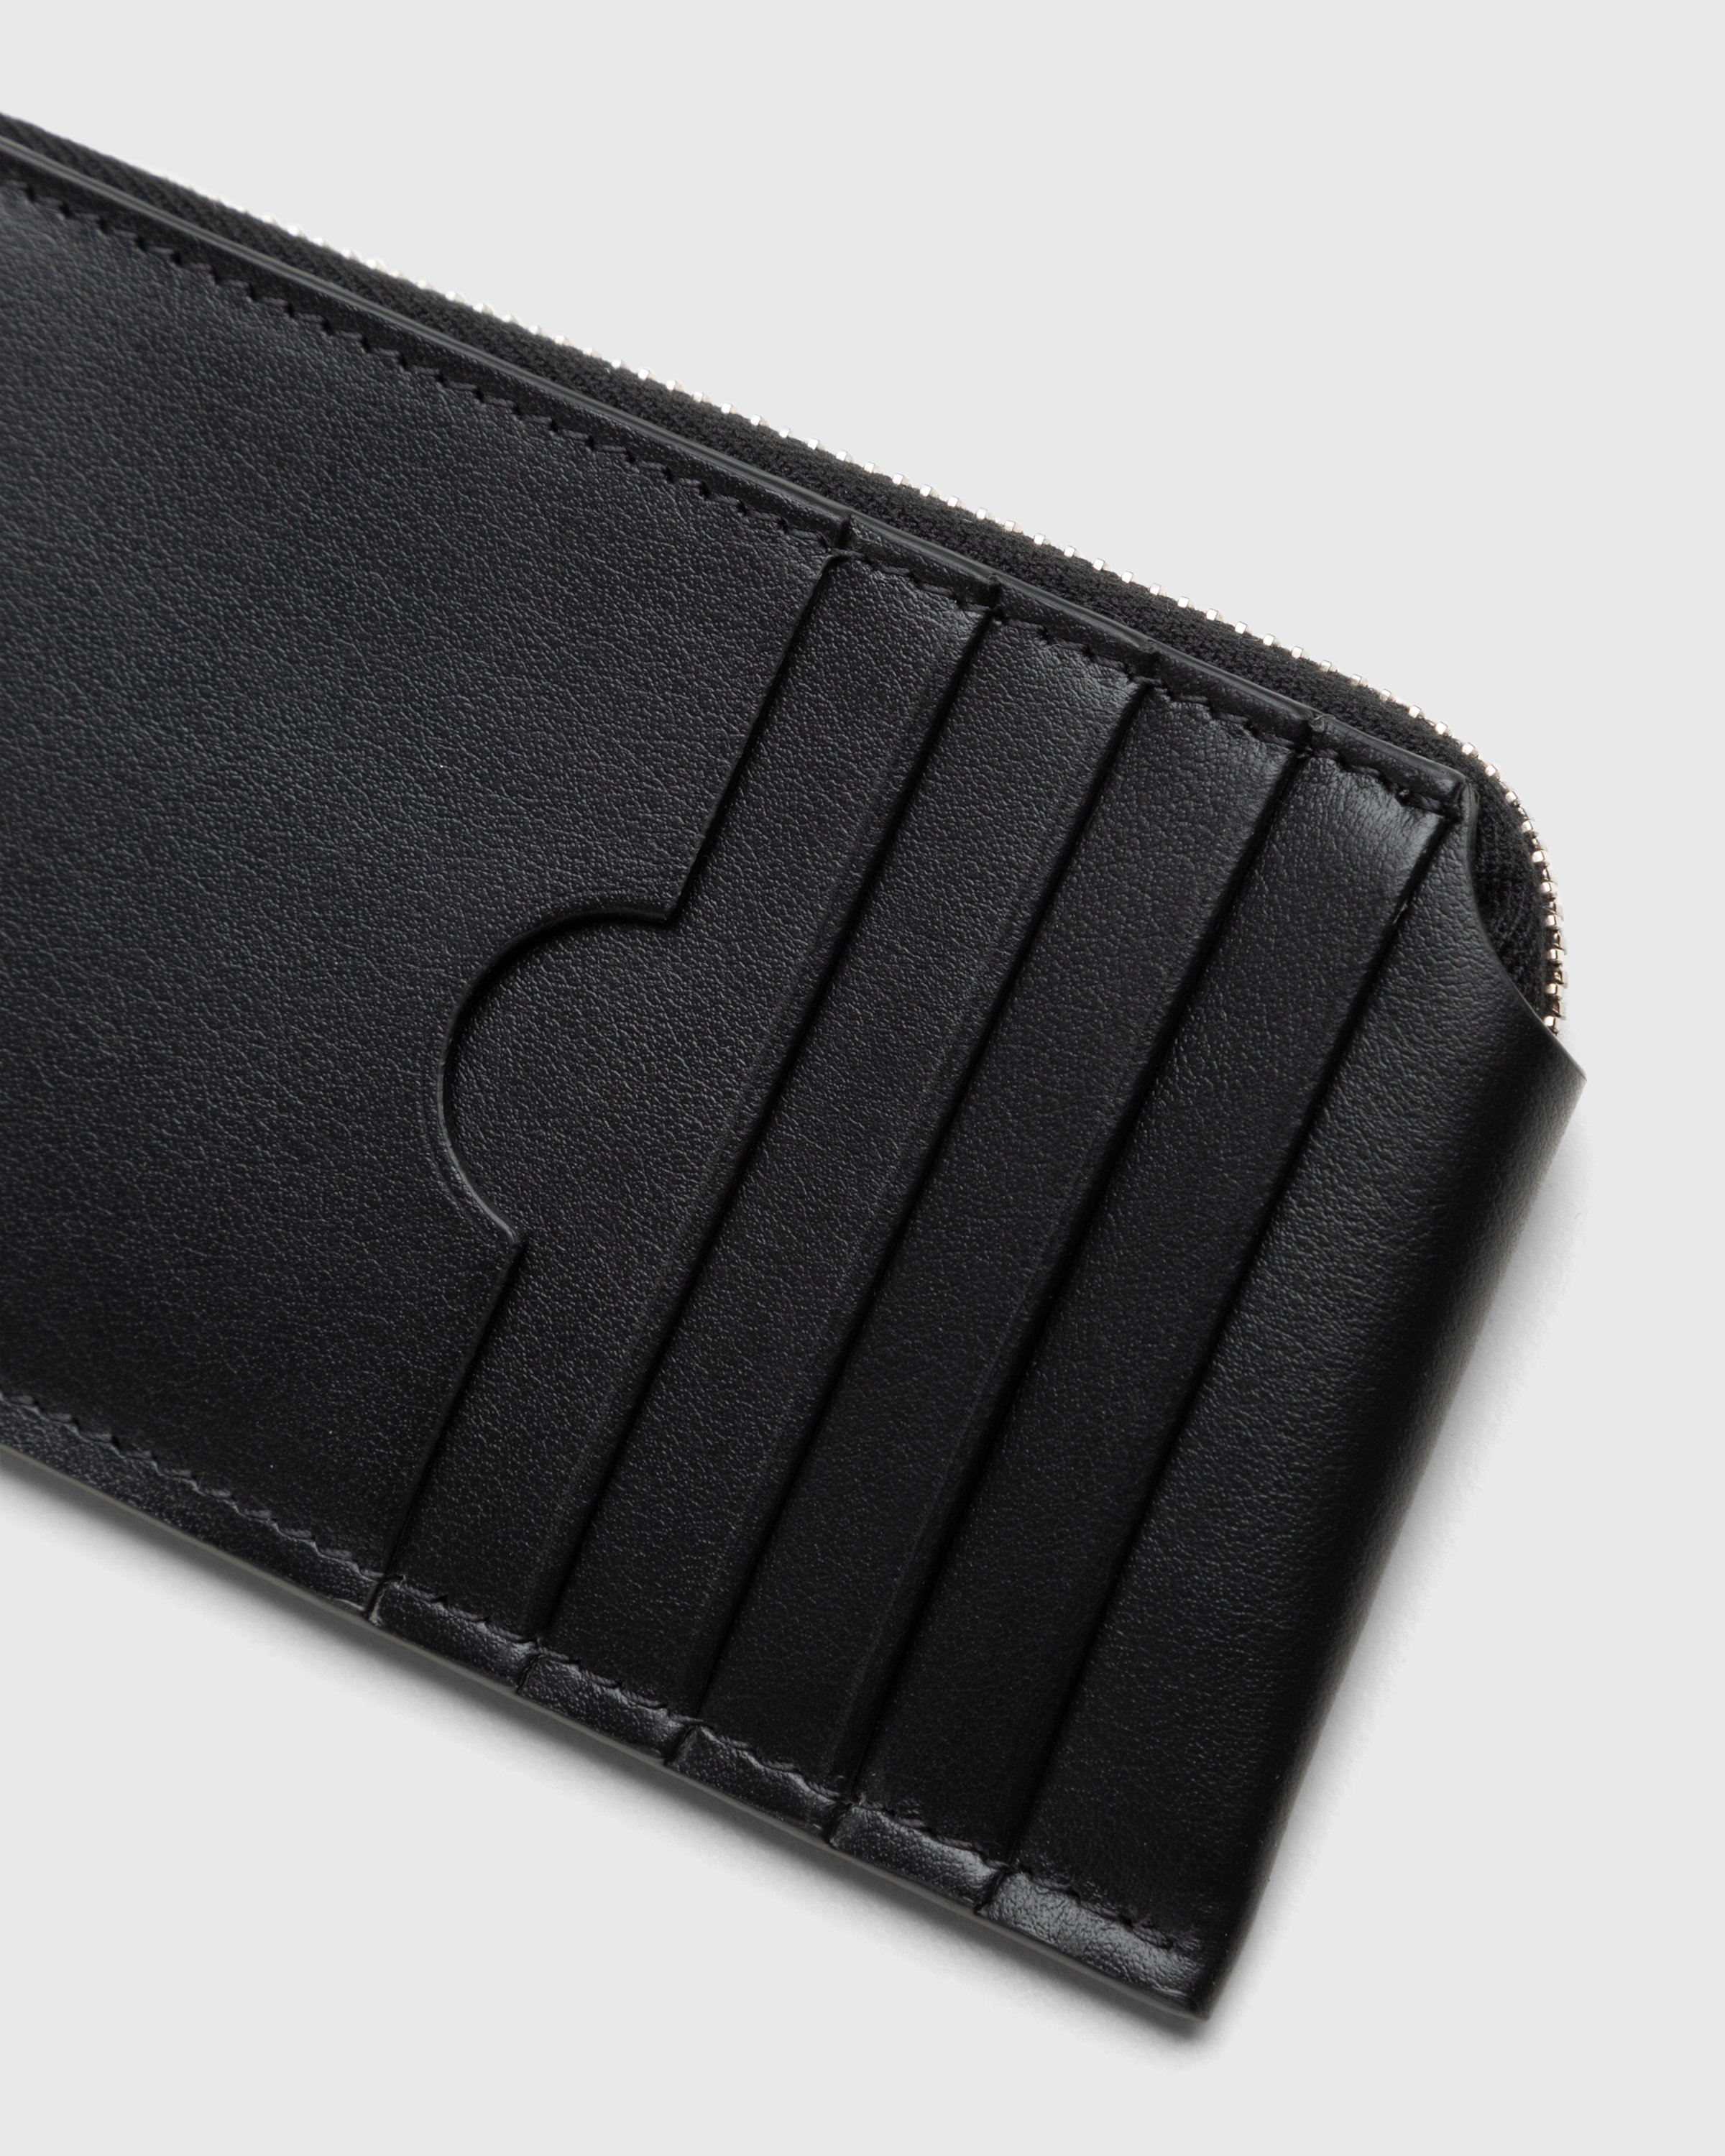 Acne Studios - Leather Zip Wallet Black - Accessories - Black - Image 4